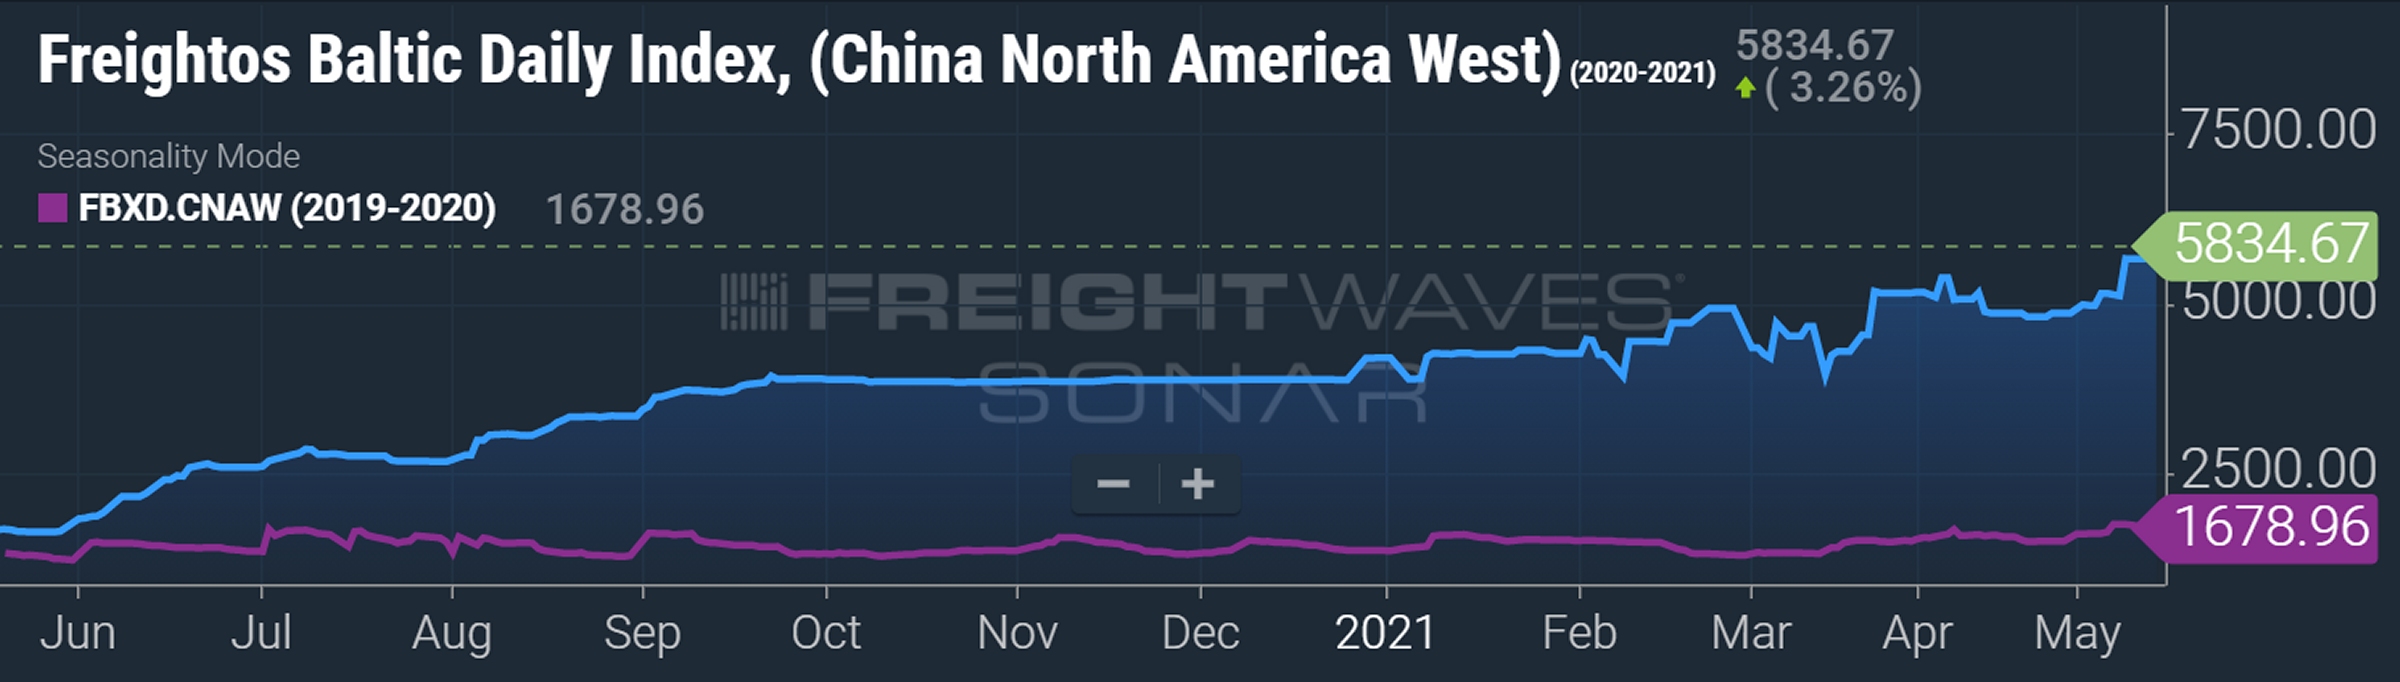 https://www.freightwaves.com/wp-content/uploads/2021/05/westcoast2.jpg